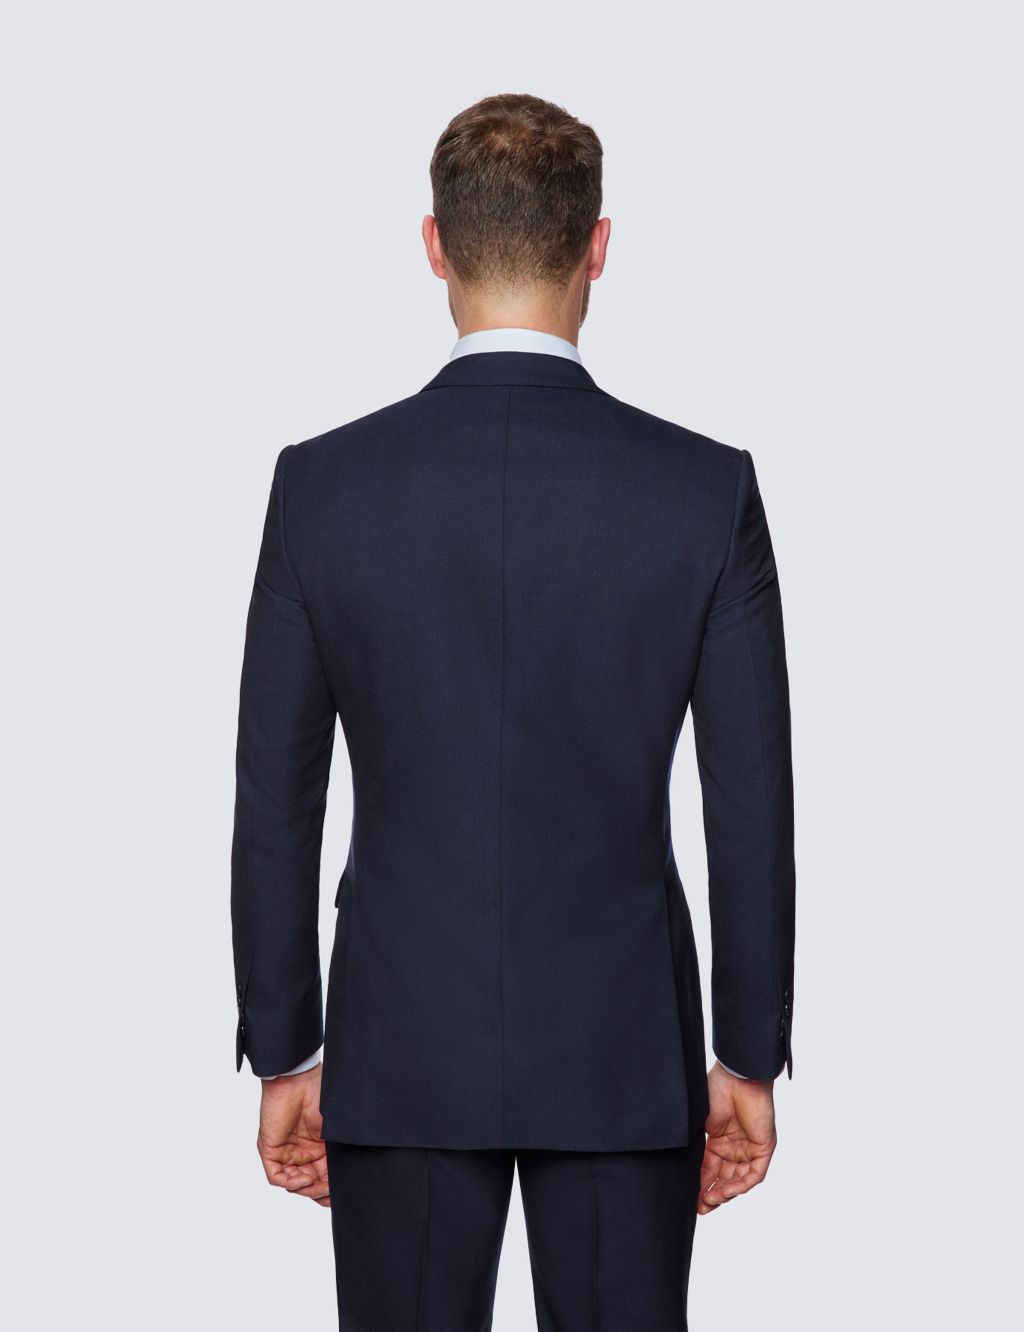 Slim Fit Pure Wool Textured Suit Jacket image 3